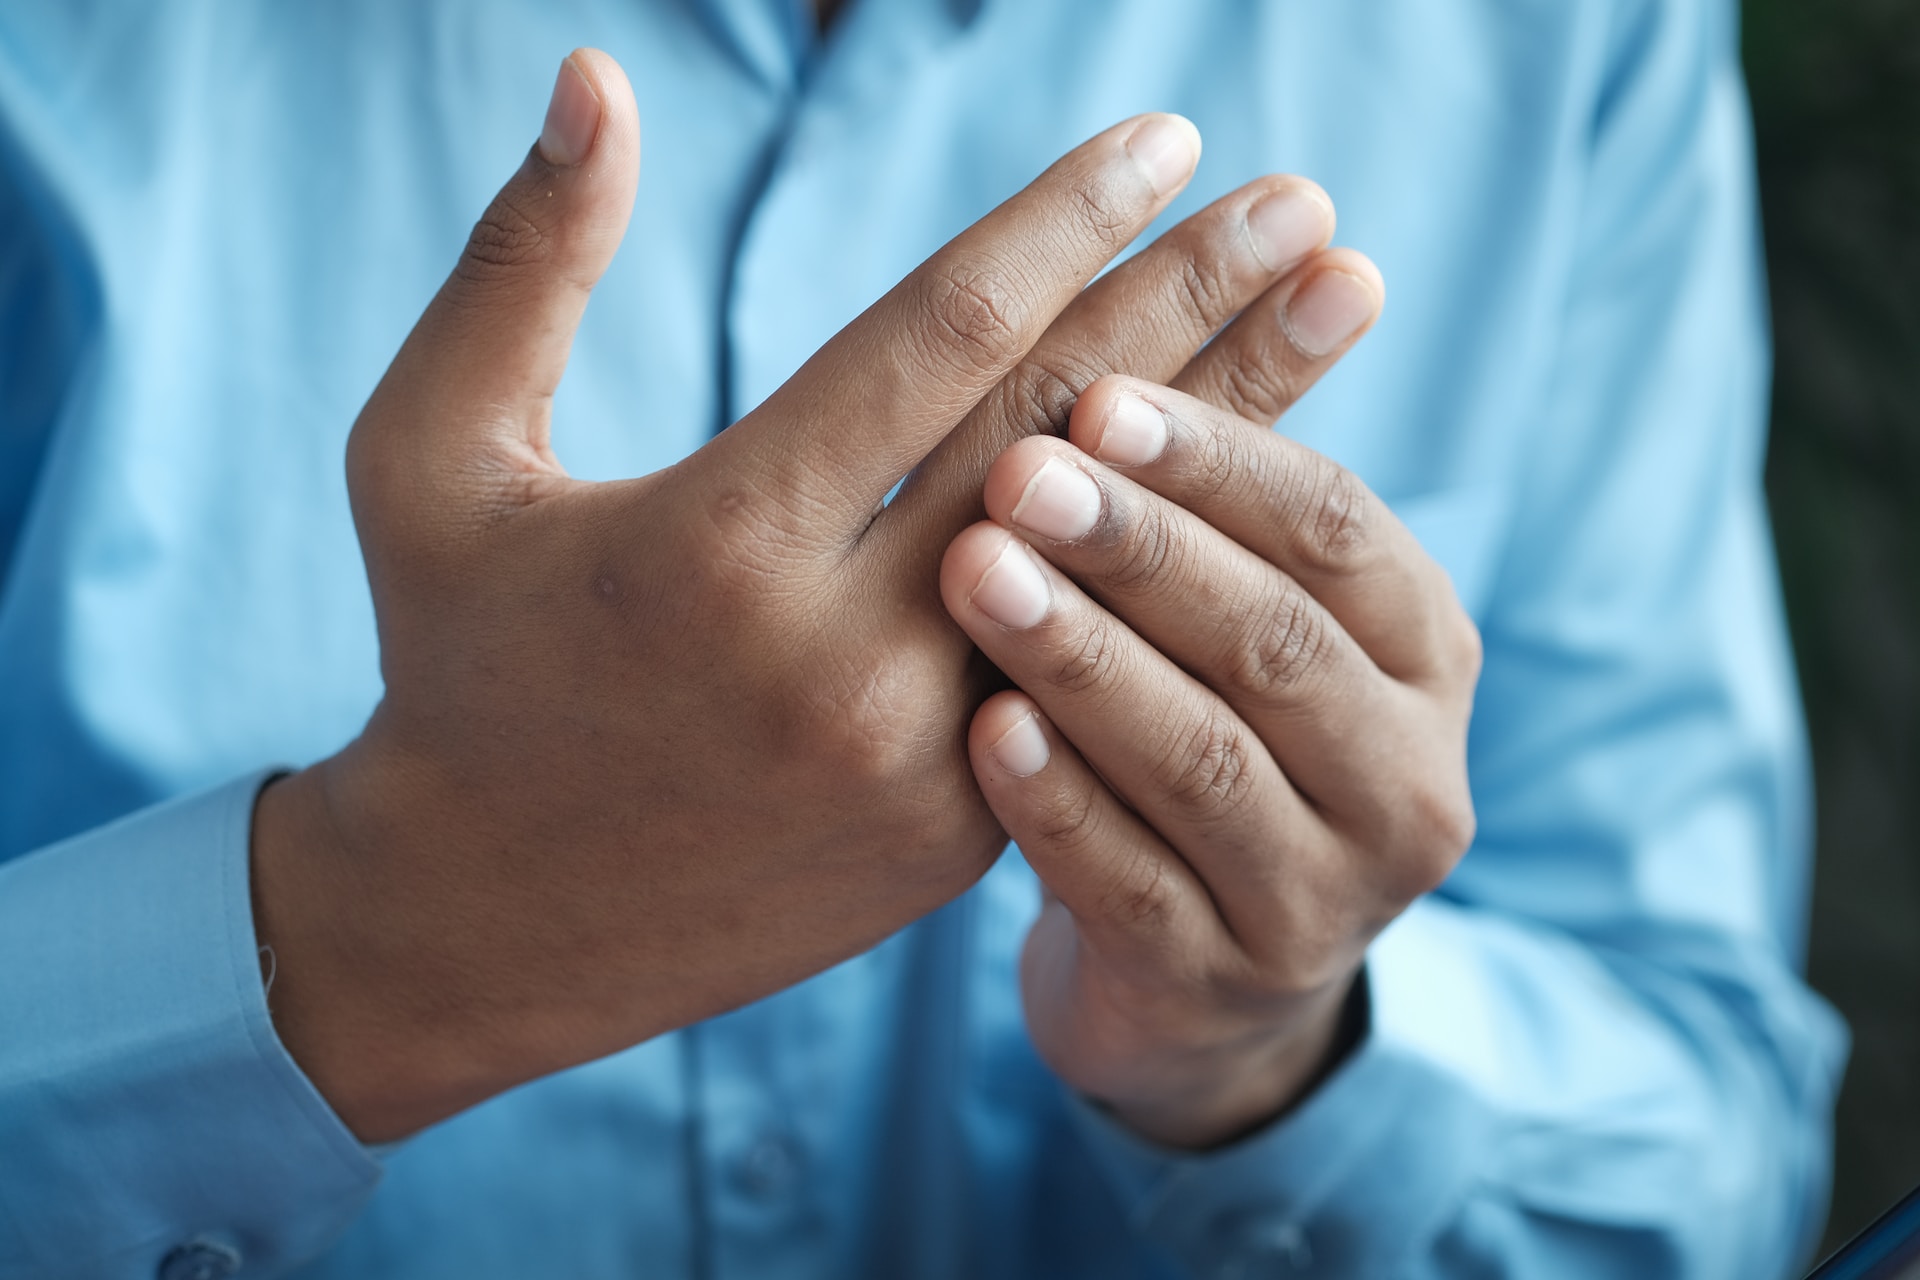 Arthritis: Causes, Symptoms, and Treatment